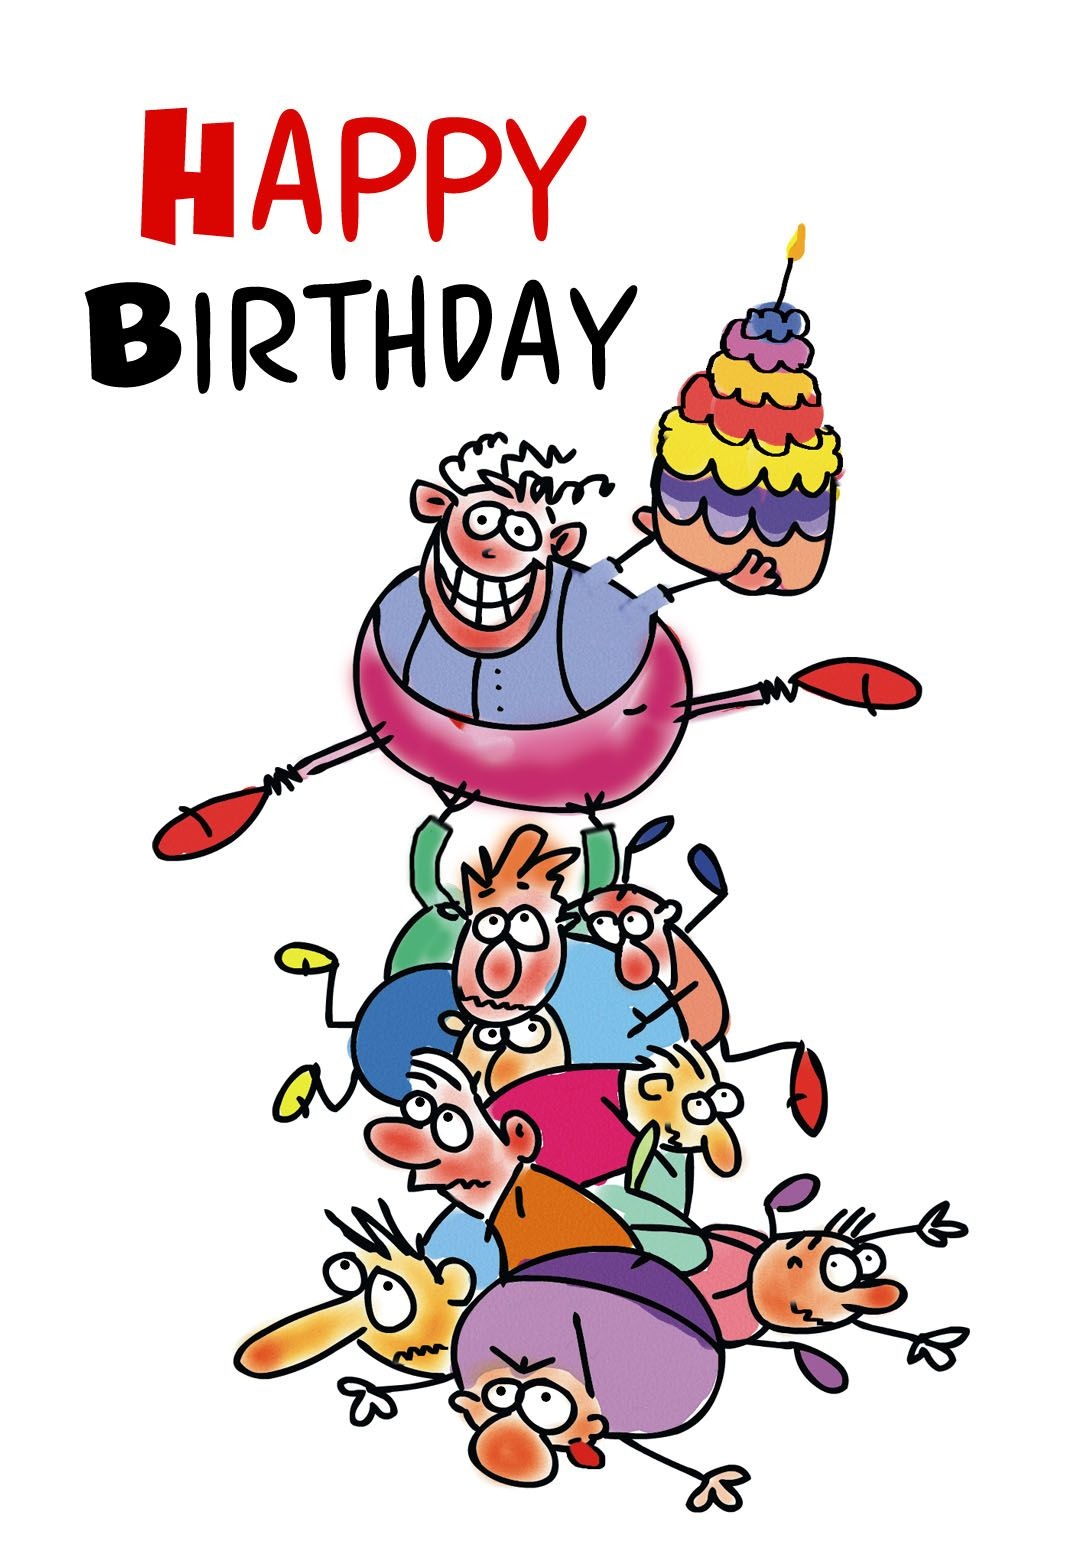 Free Printable Funny Birthday Greeting Card | Gifts To Make | Free - Free Printable Funny Birthday Cards